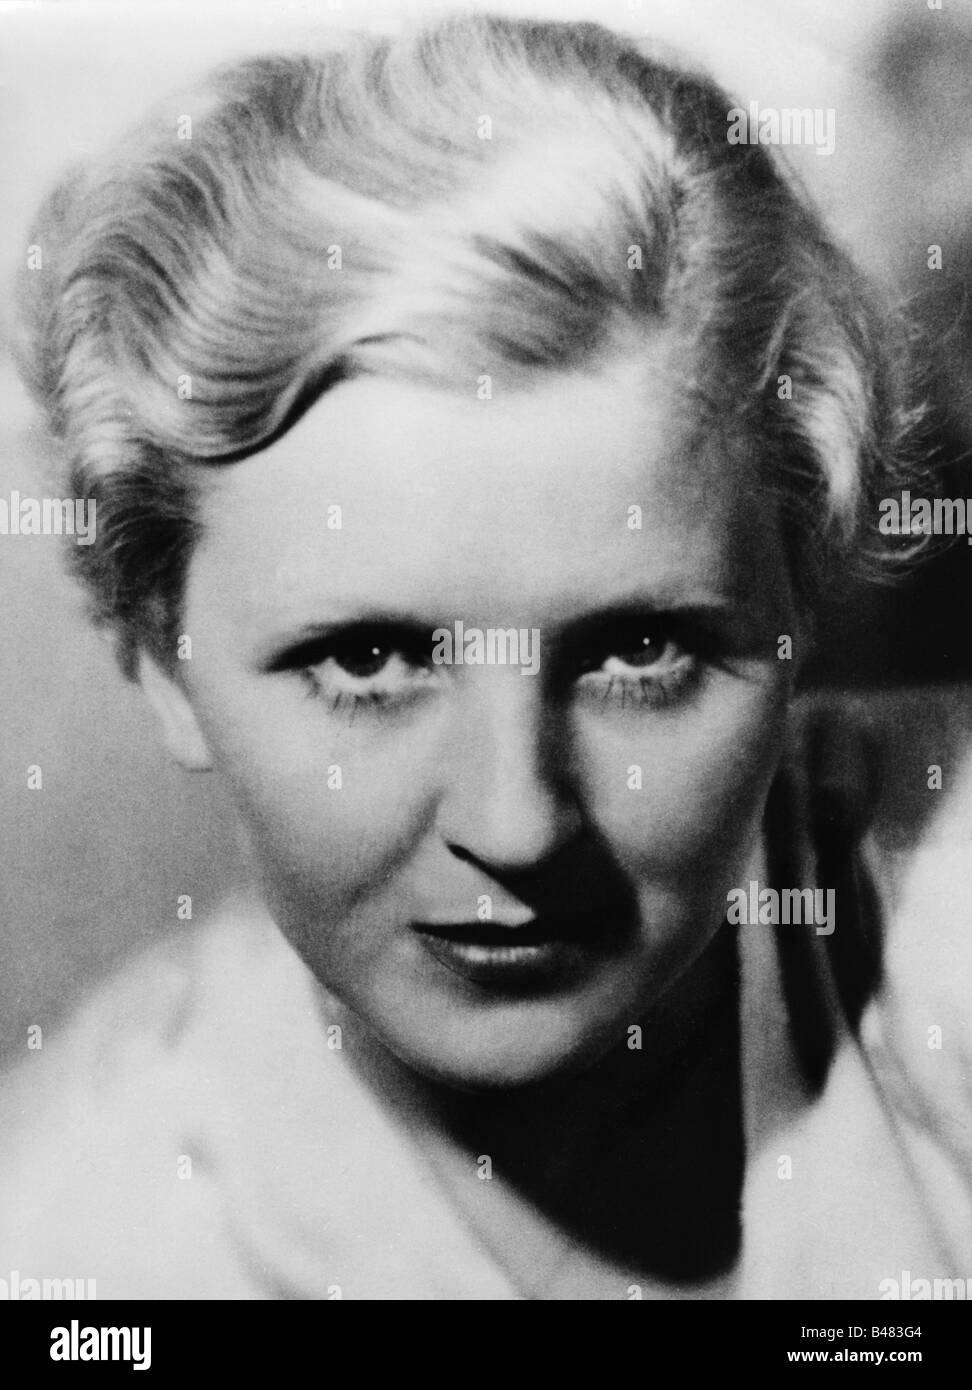 Braun, Eva, 6.2.1912 - 30.4.1945, companion of Adolf Hitler, portrait, circa 1940, Stock Photo